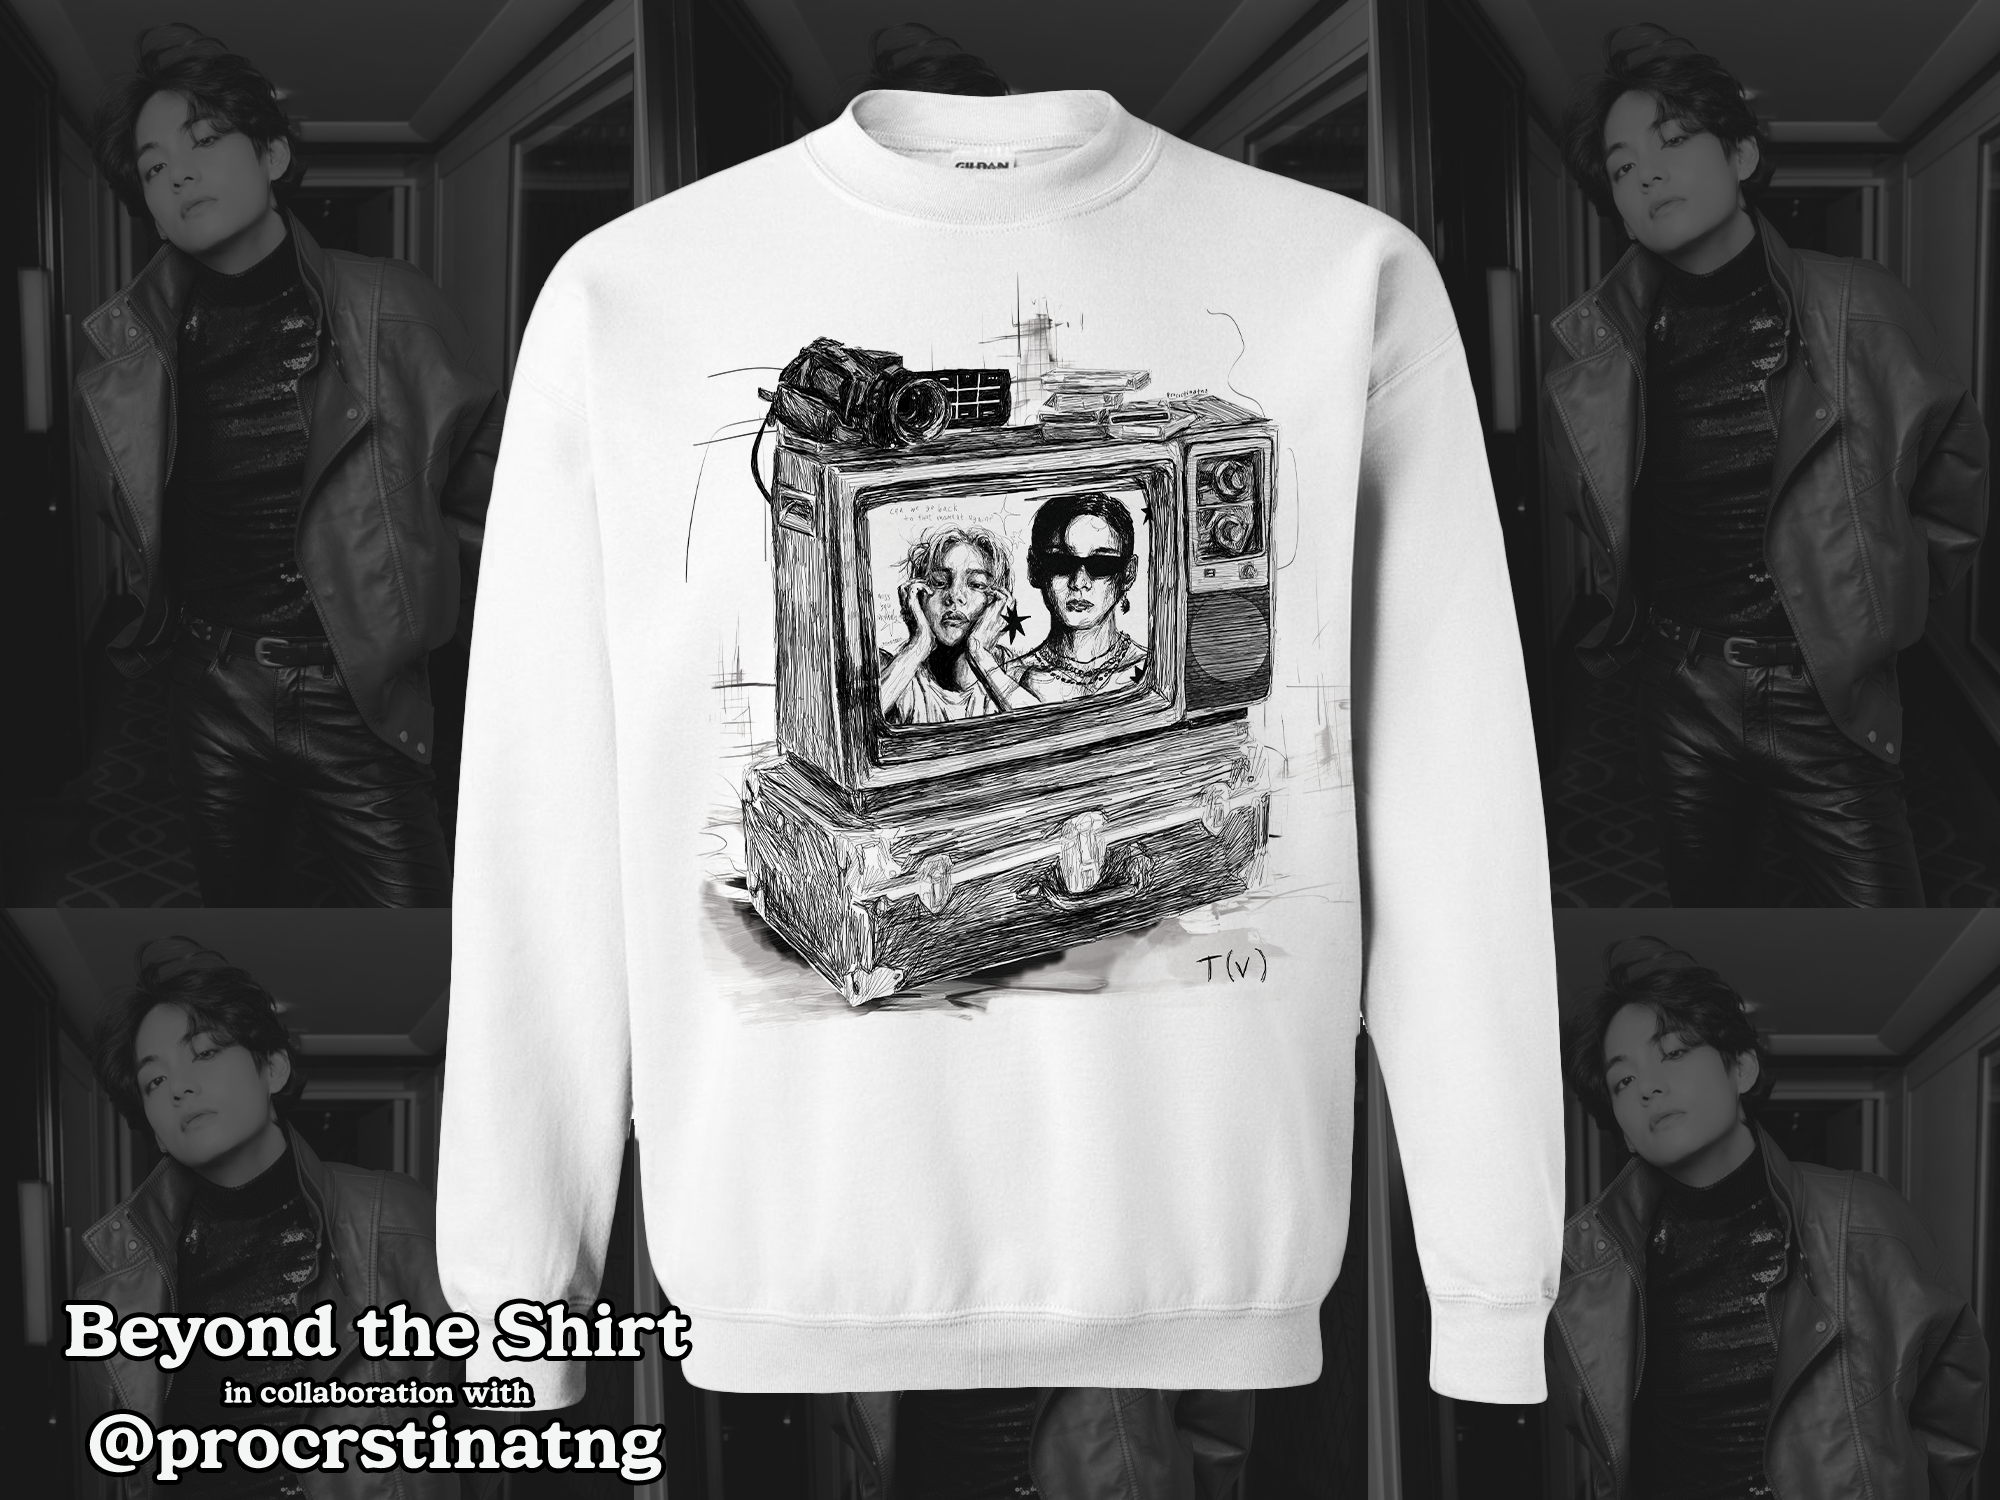 T(V) Taehyung Shirts and Sweatshirts Collaboration with procrstinatng